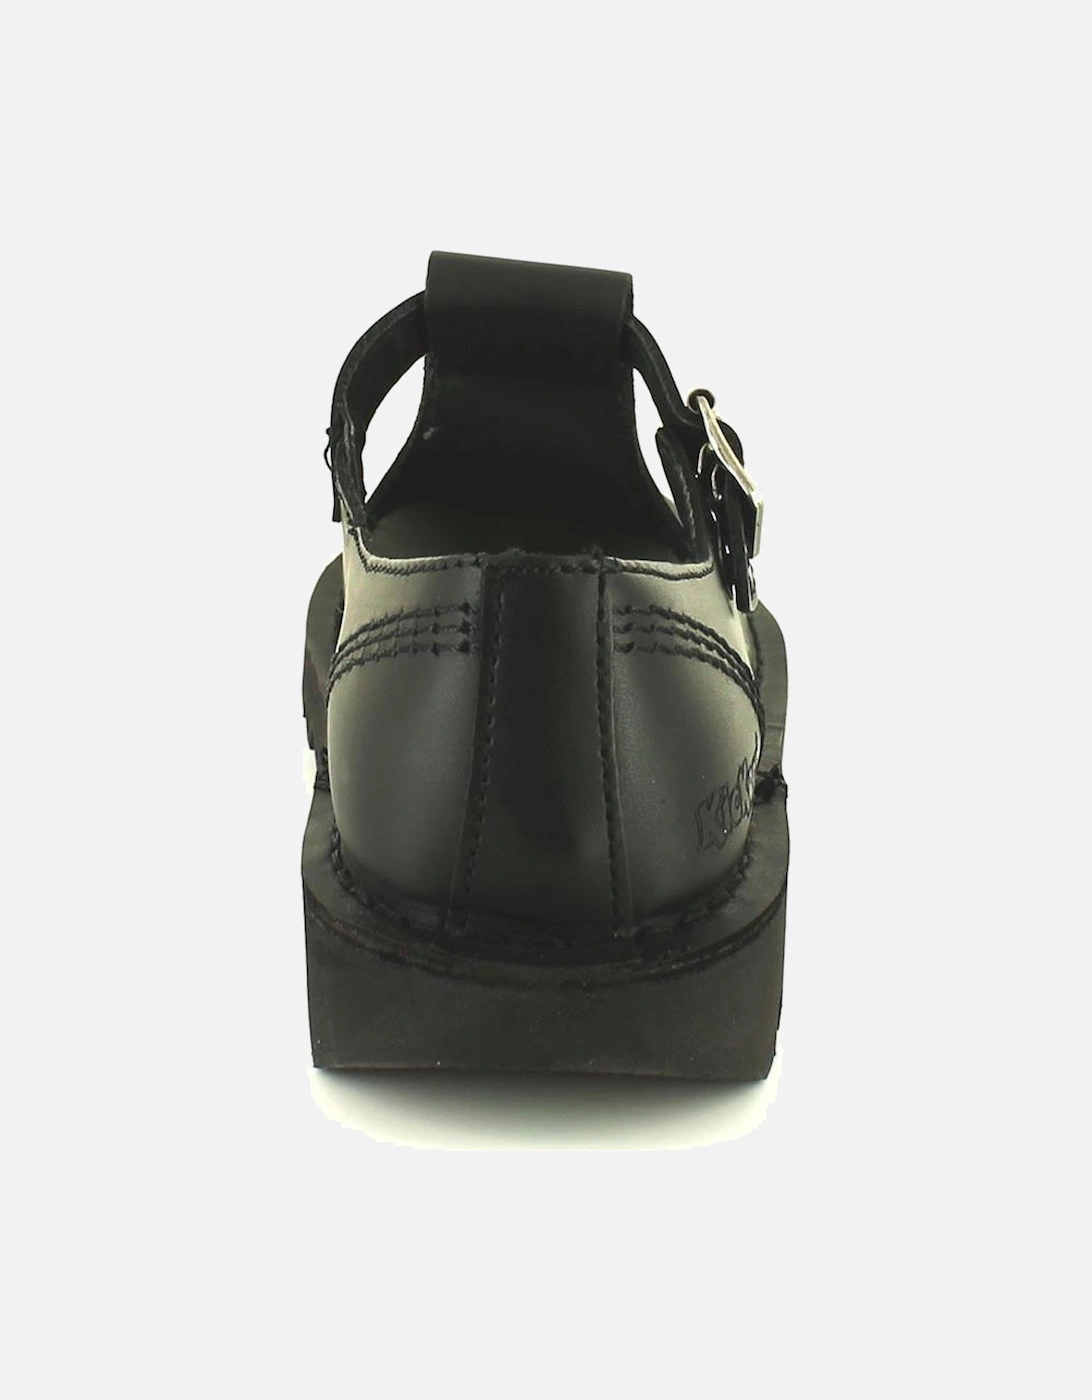 Womens Shoes Work School Aztec Leather Buckle black UK Size